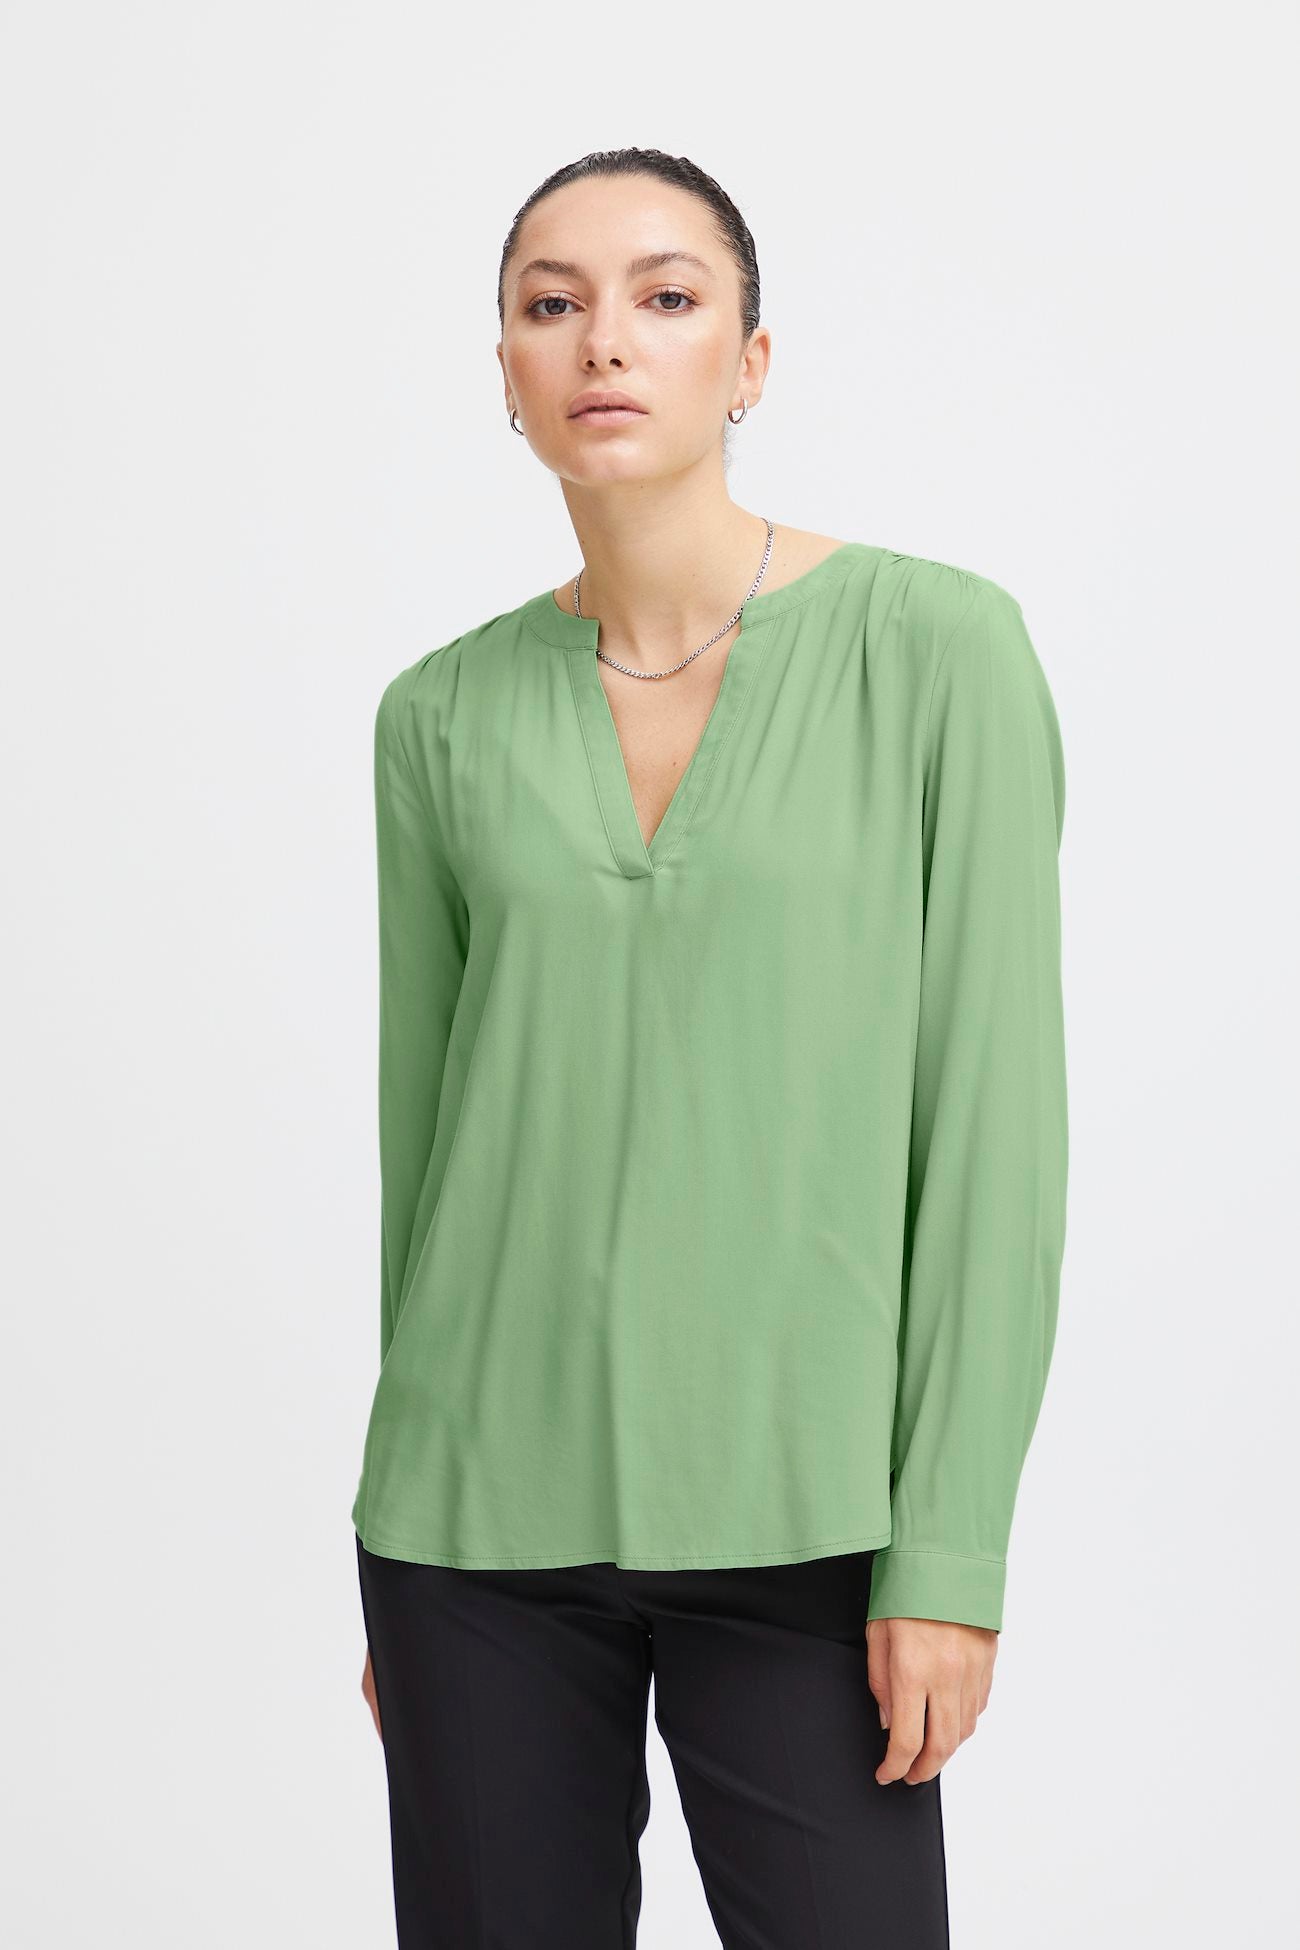 ihmain green long sleeved shirt| Ichi